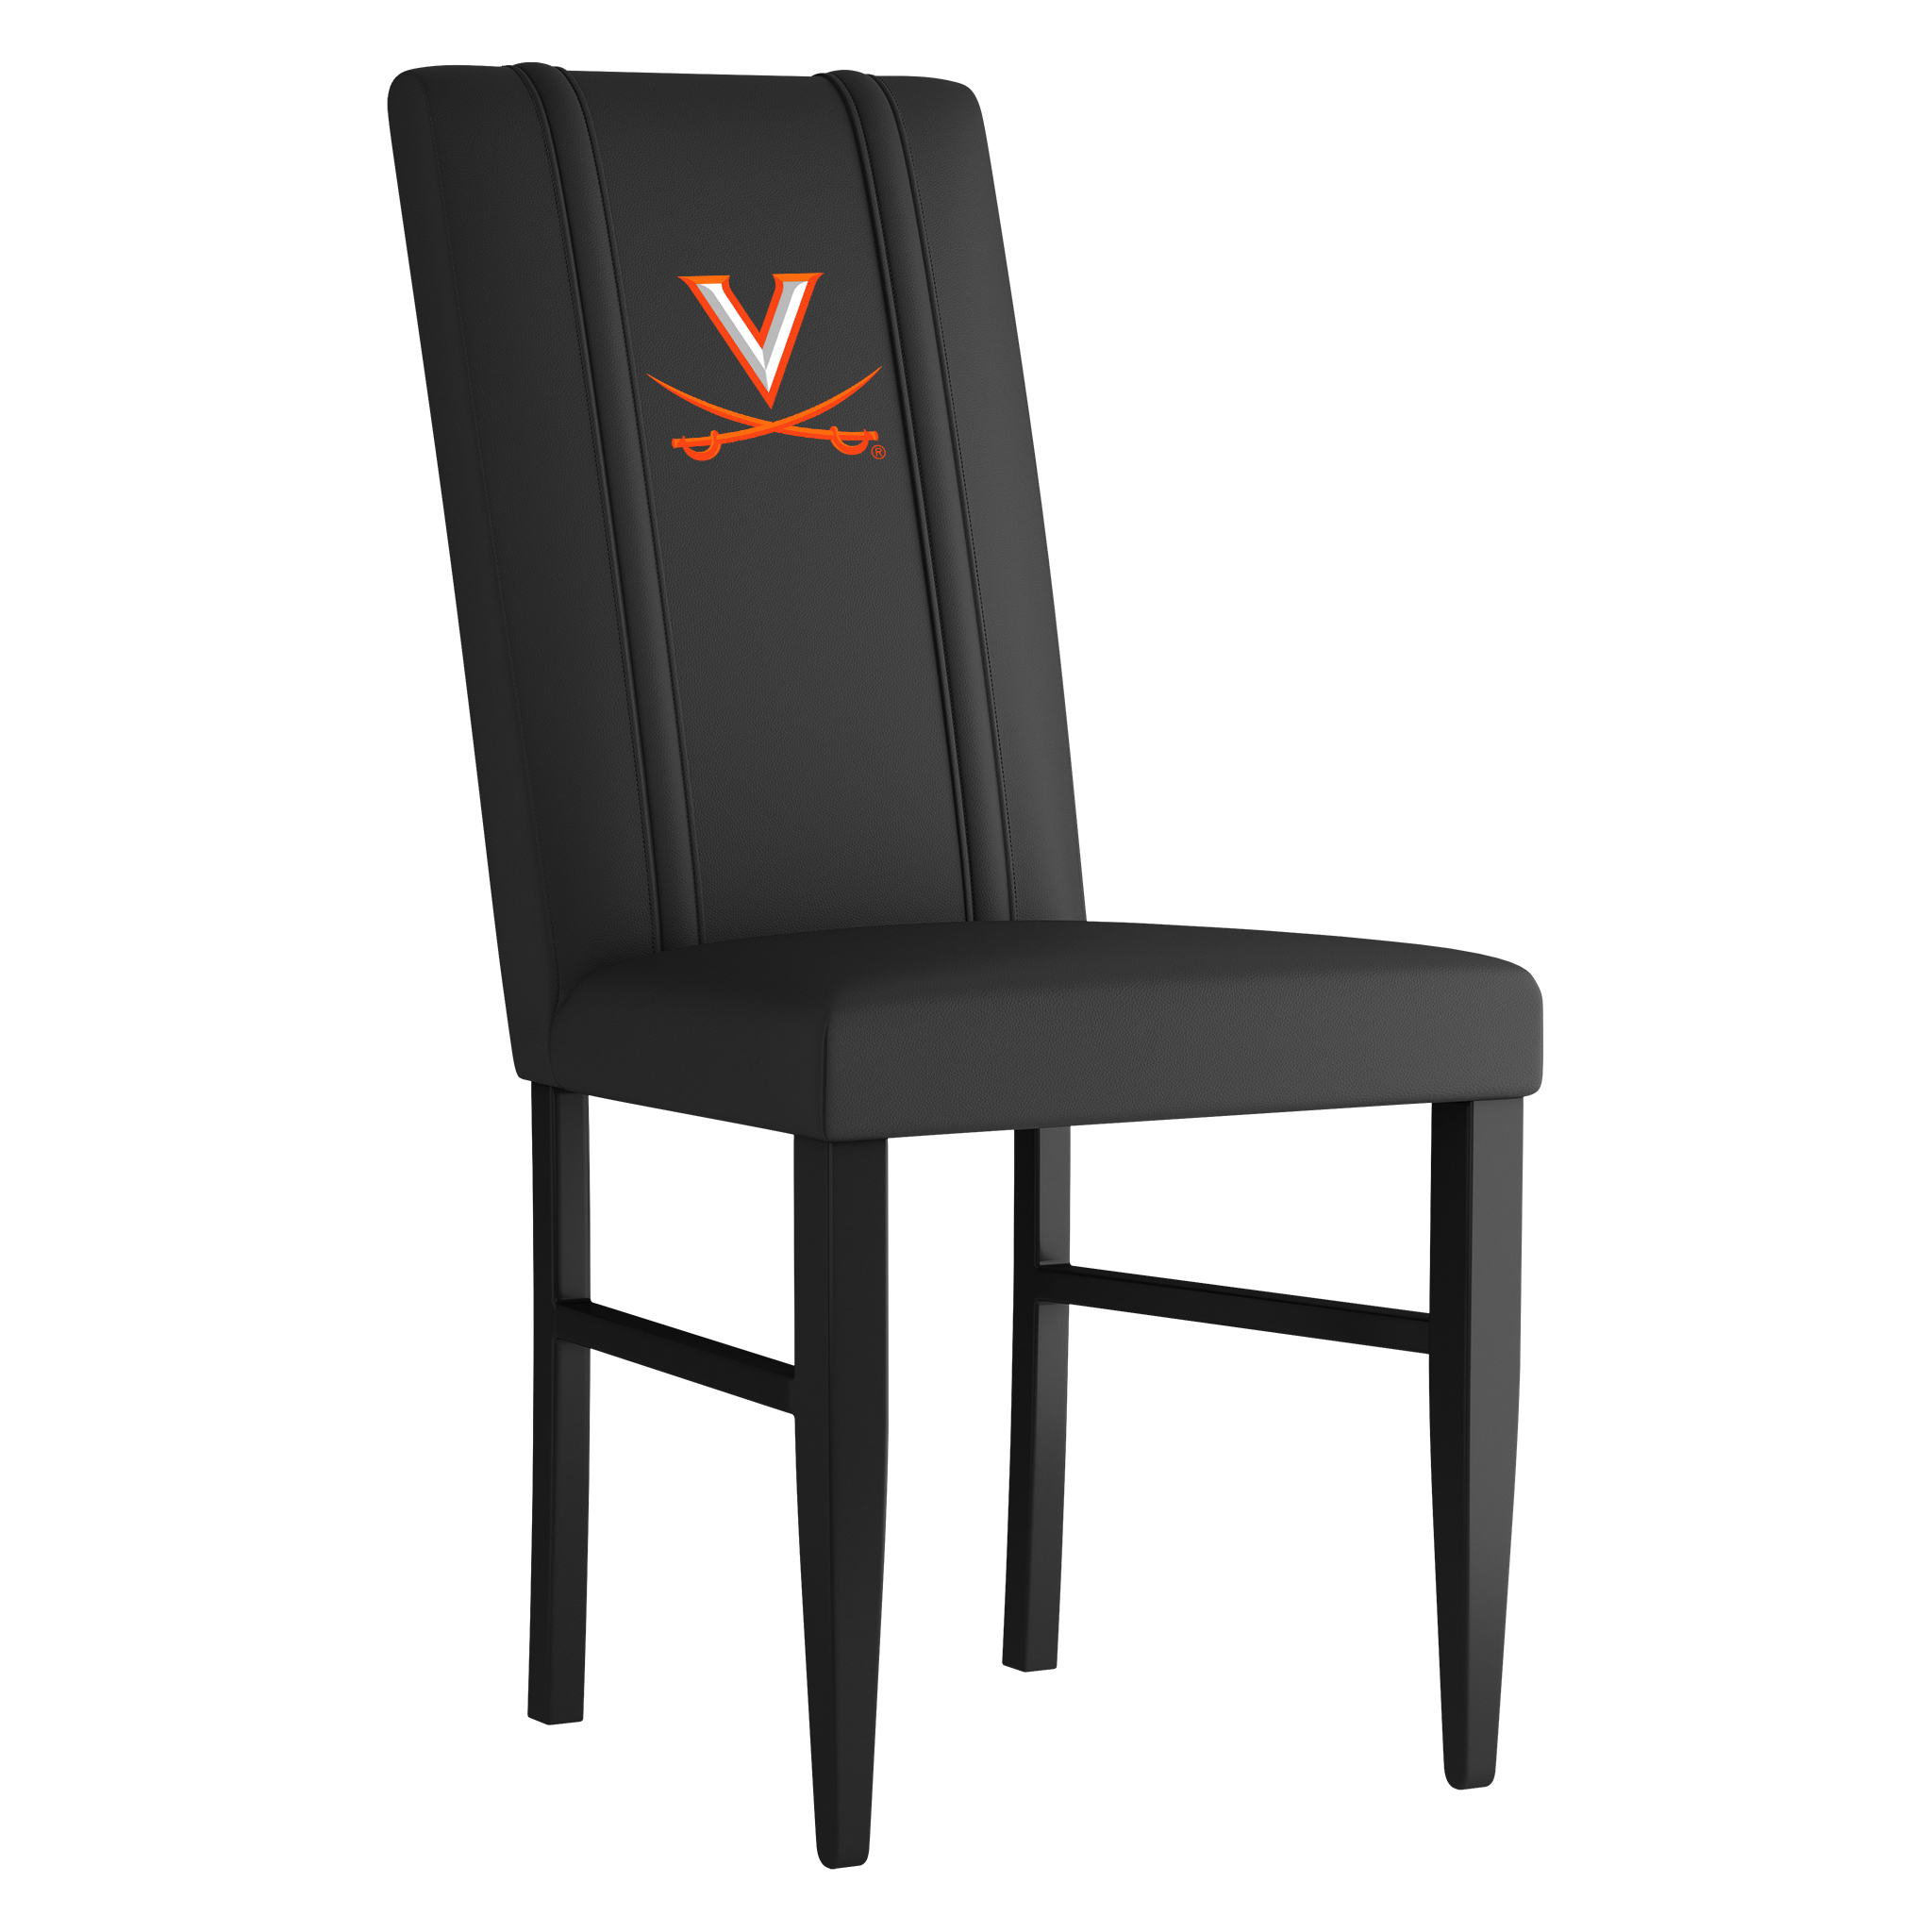 Virginia Cavaliers Side Chair 2000 With Virginia Cavaliers Logo